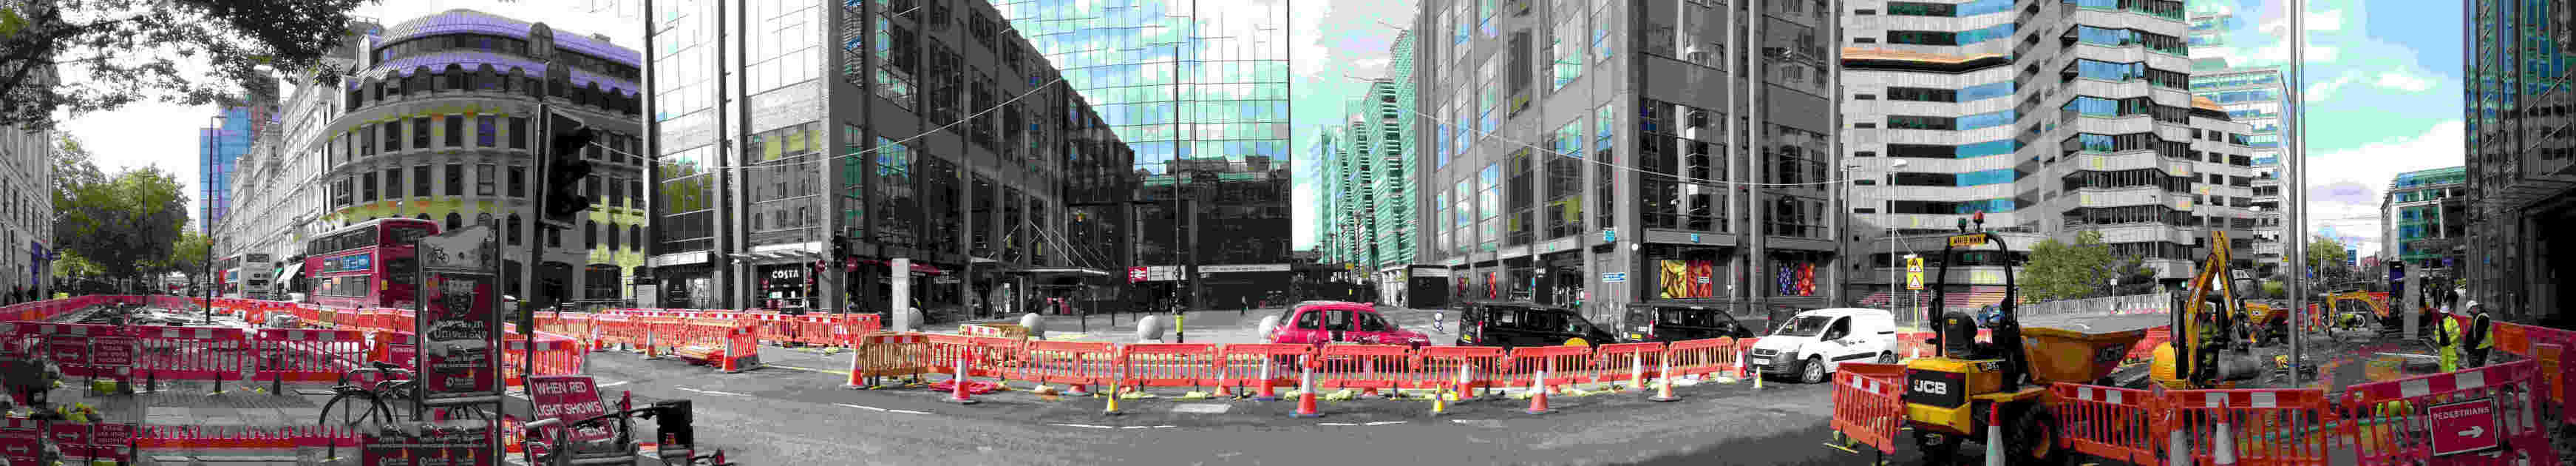 ImagesBirmingham/Birmingham Financial District Colmore Row - St Chads Panorama.jpg